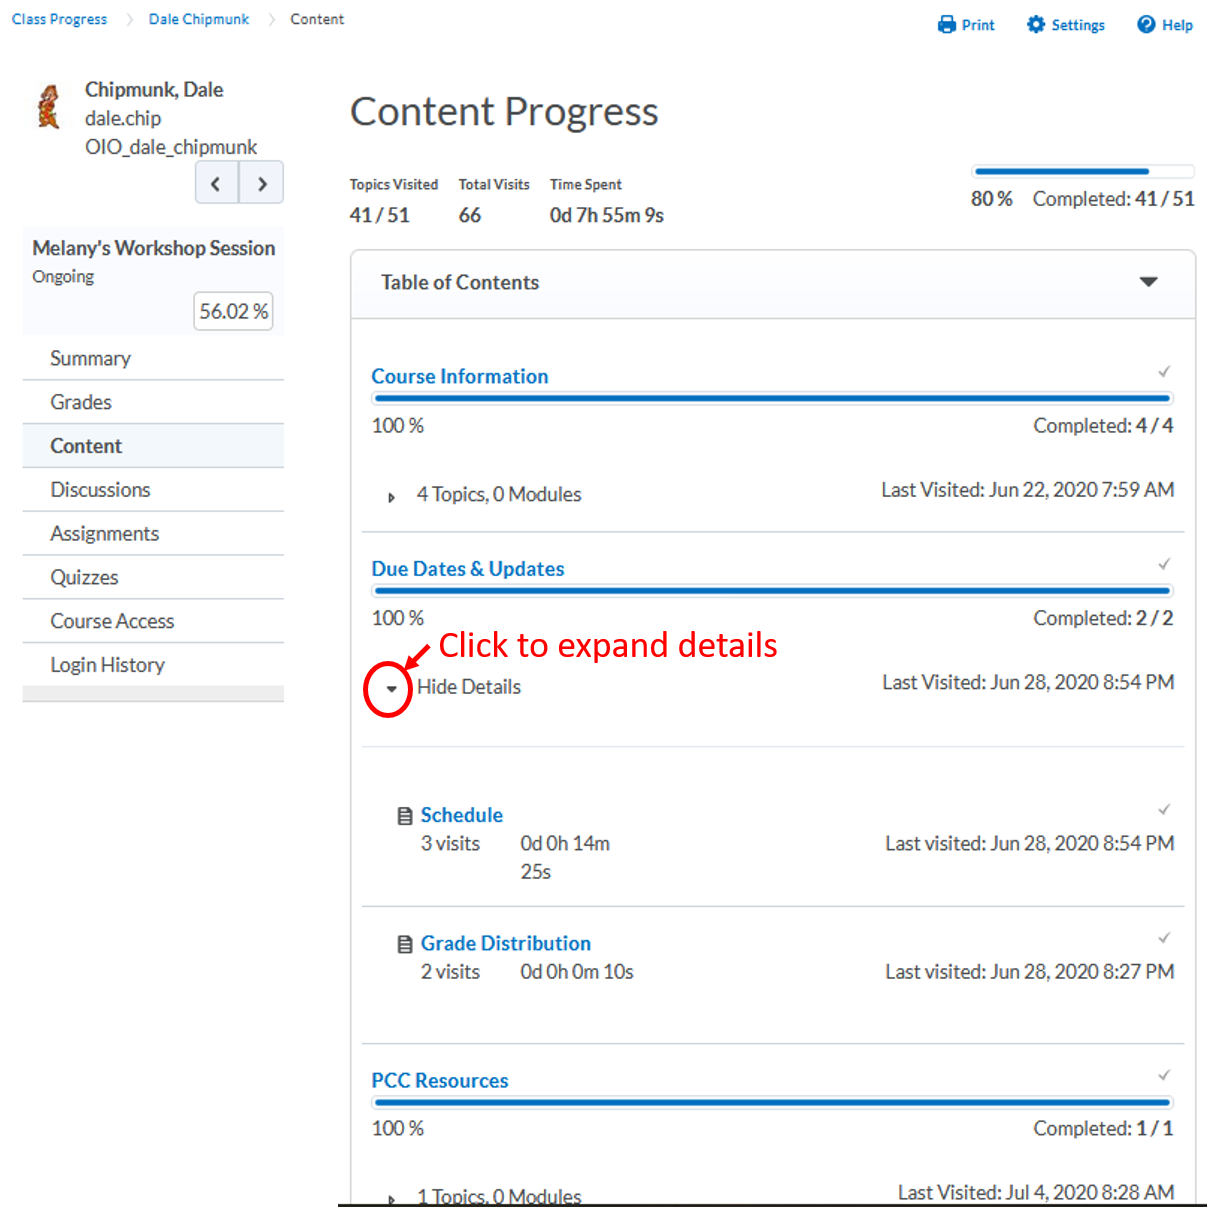 class-progress: View Content detail information